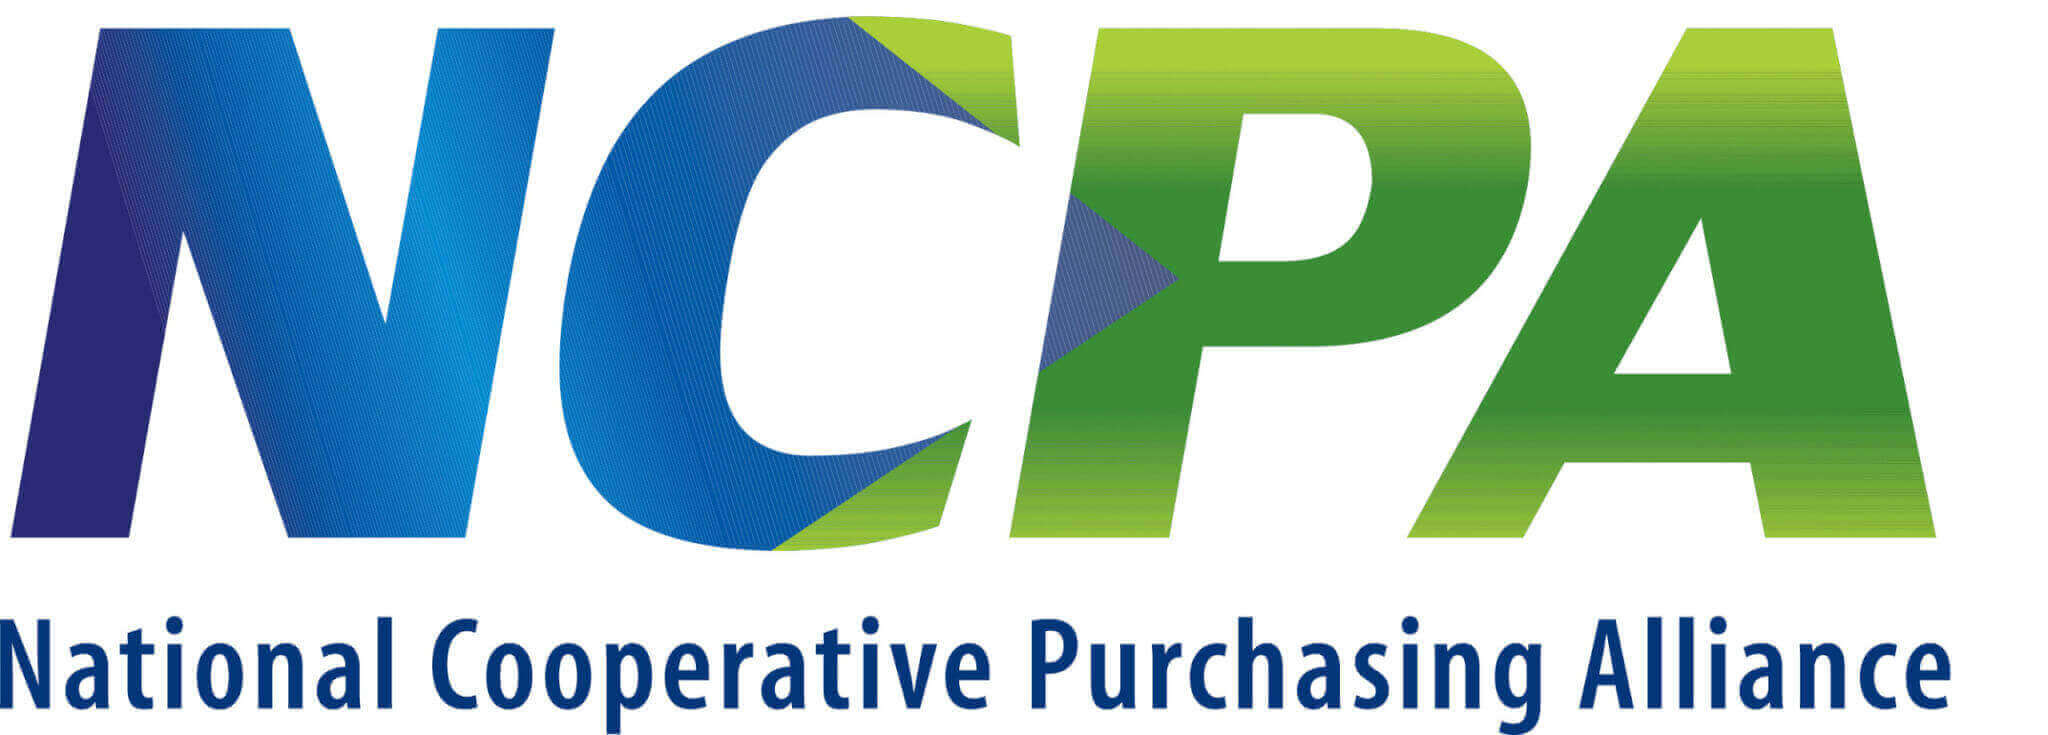 national cooperative purchasing alliance logo